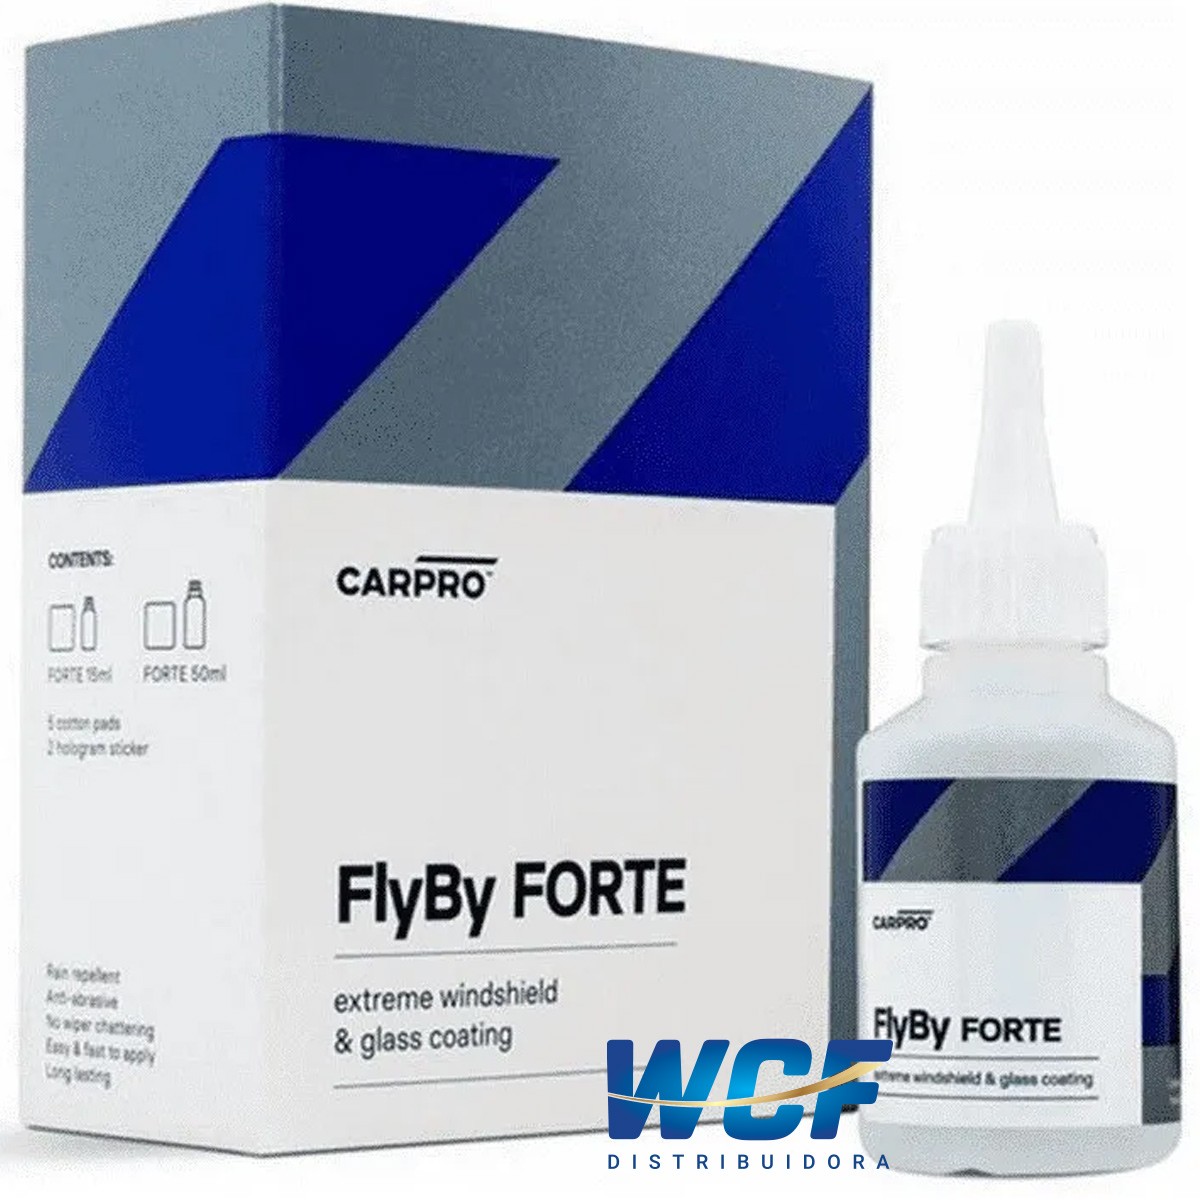 CARPRO FLYBY FORTE    KIT   COATING PARA VIDRO 15 ML